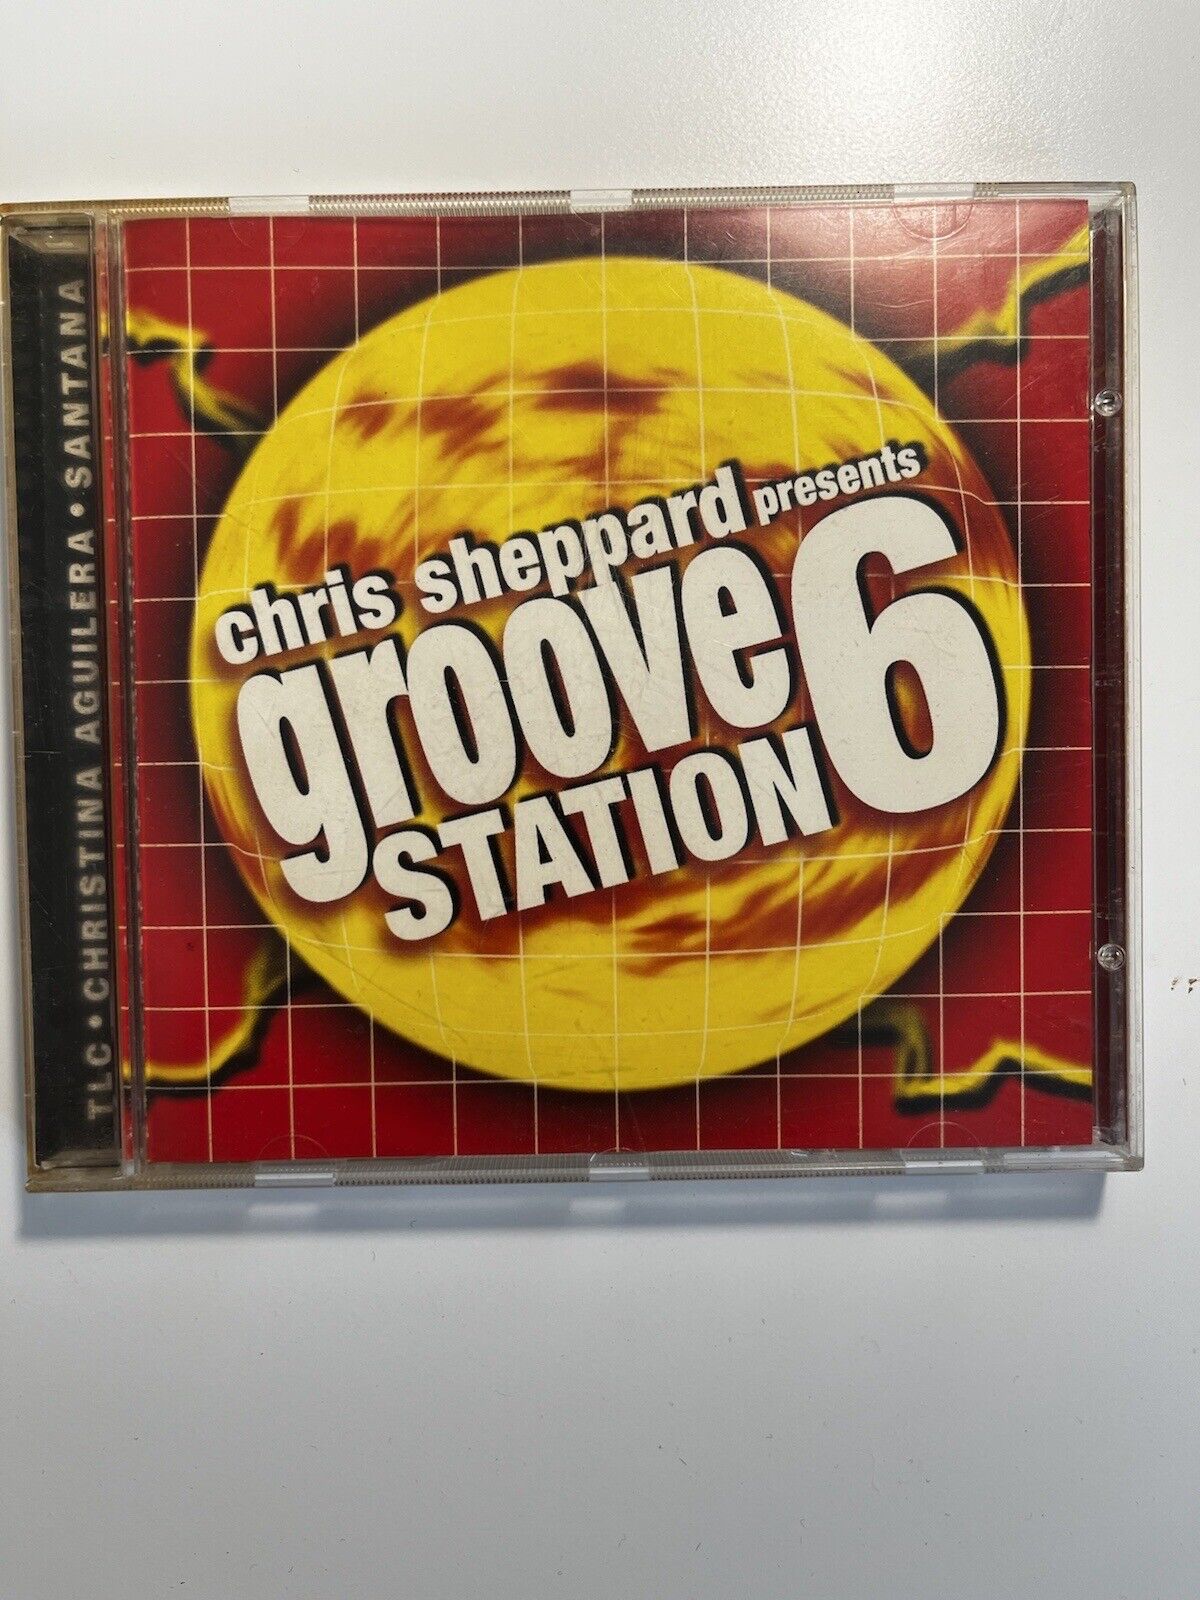 Chris Sheppard - Chris Sheppard Presents Groove Station 6 (CD)